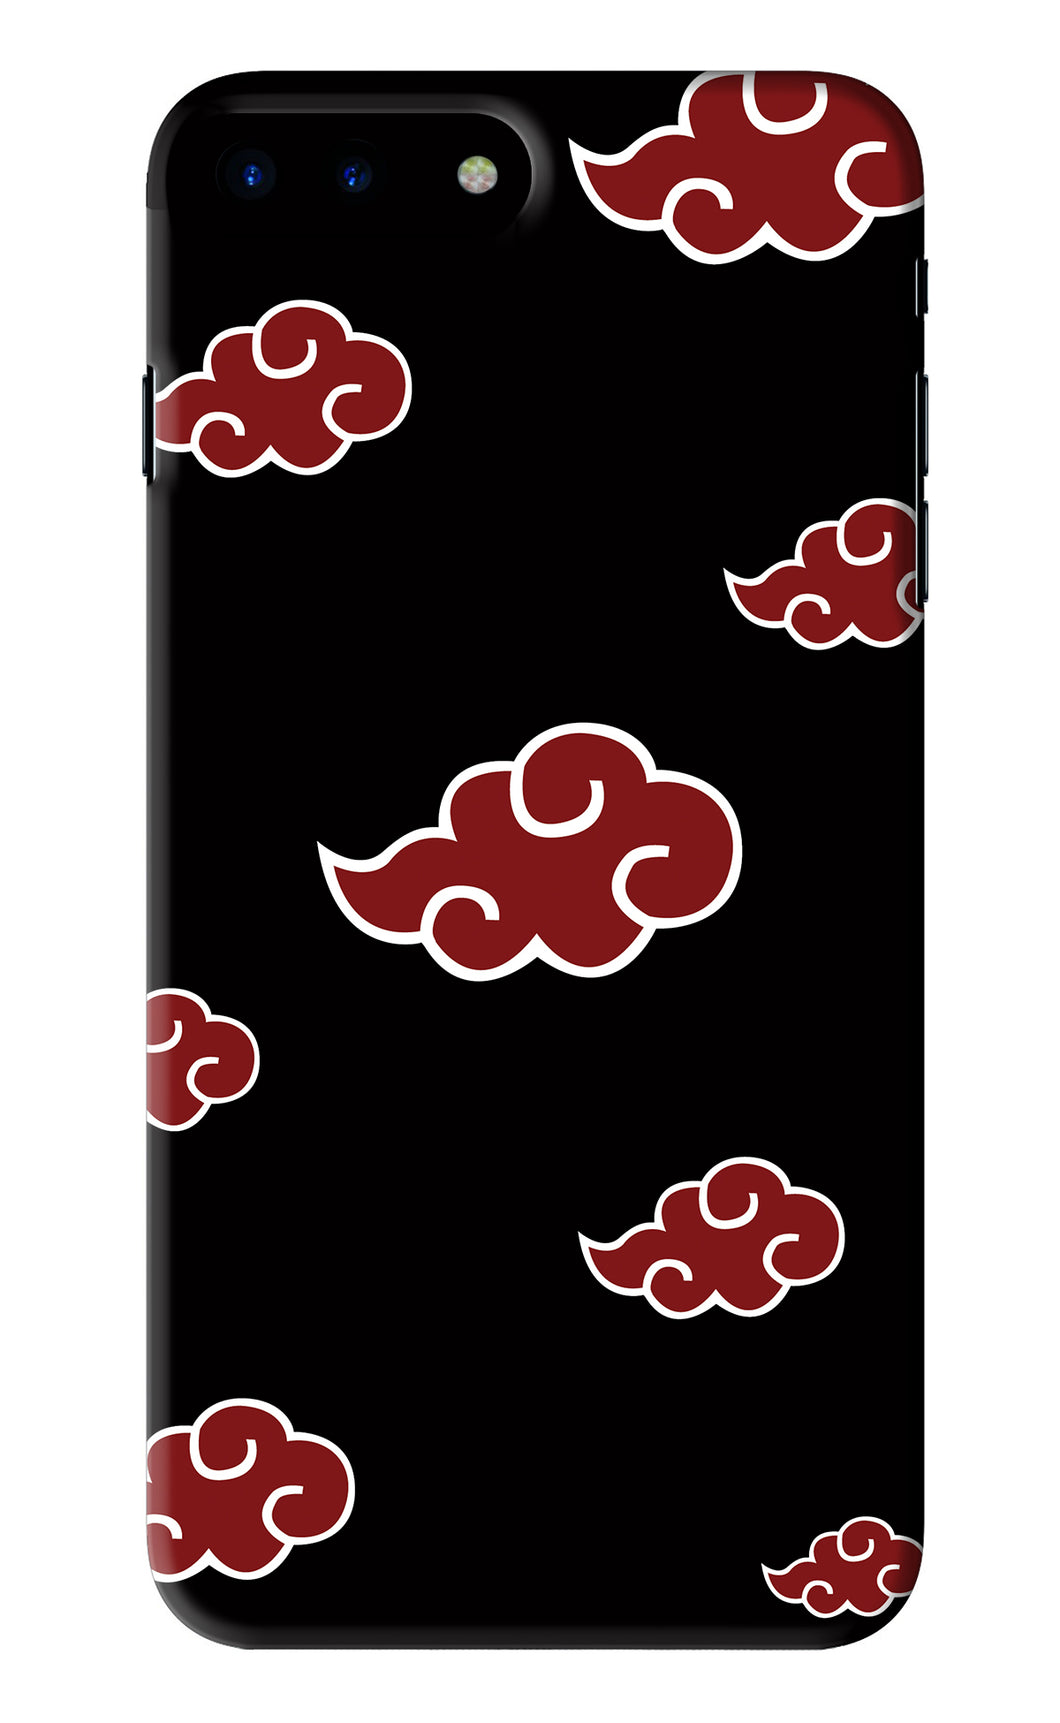 Akatsuki iPhone 7 Plus Back Skin Wrap